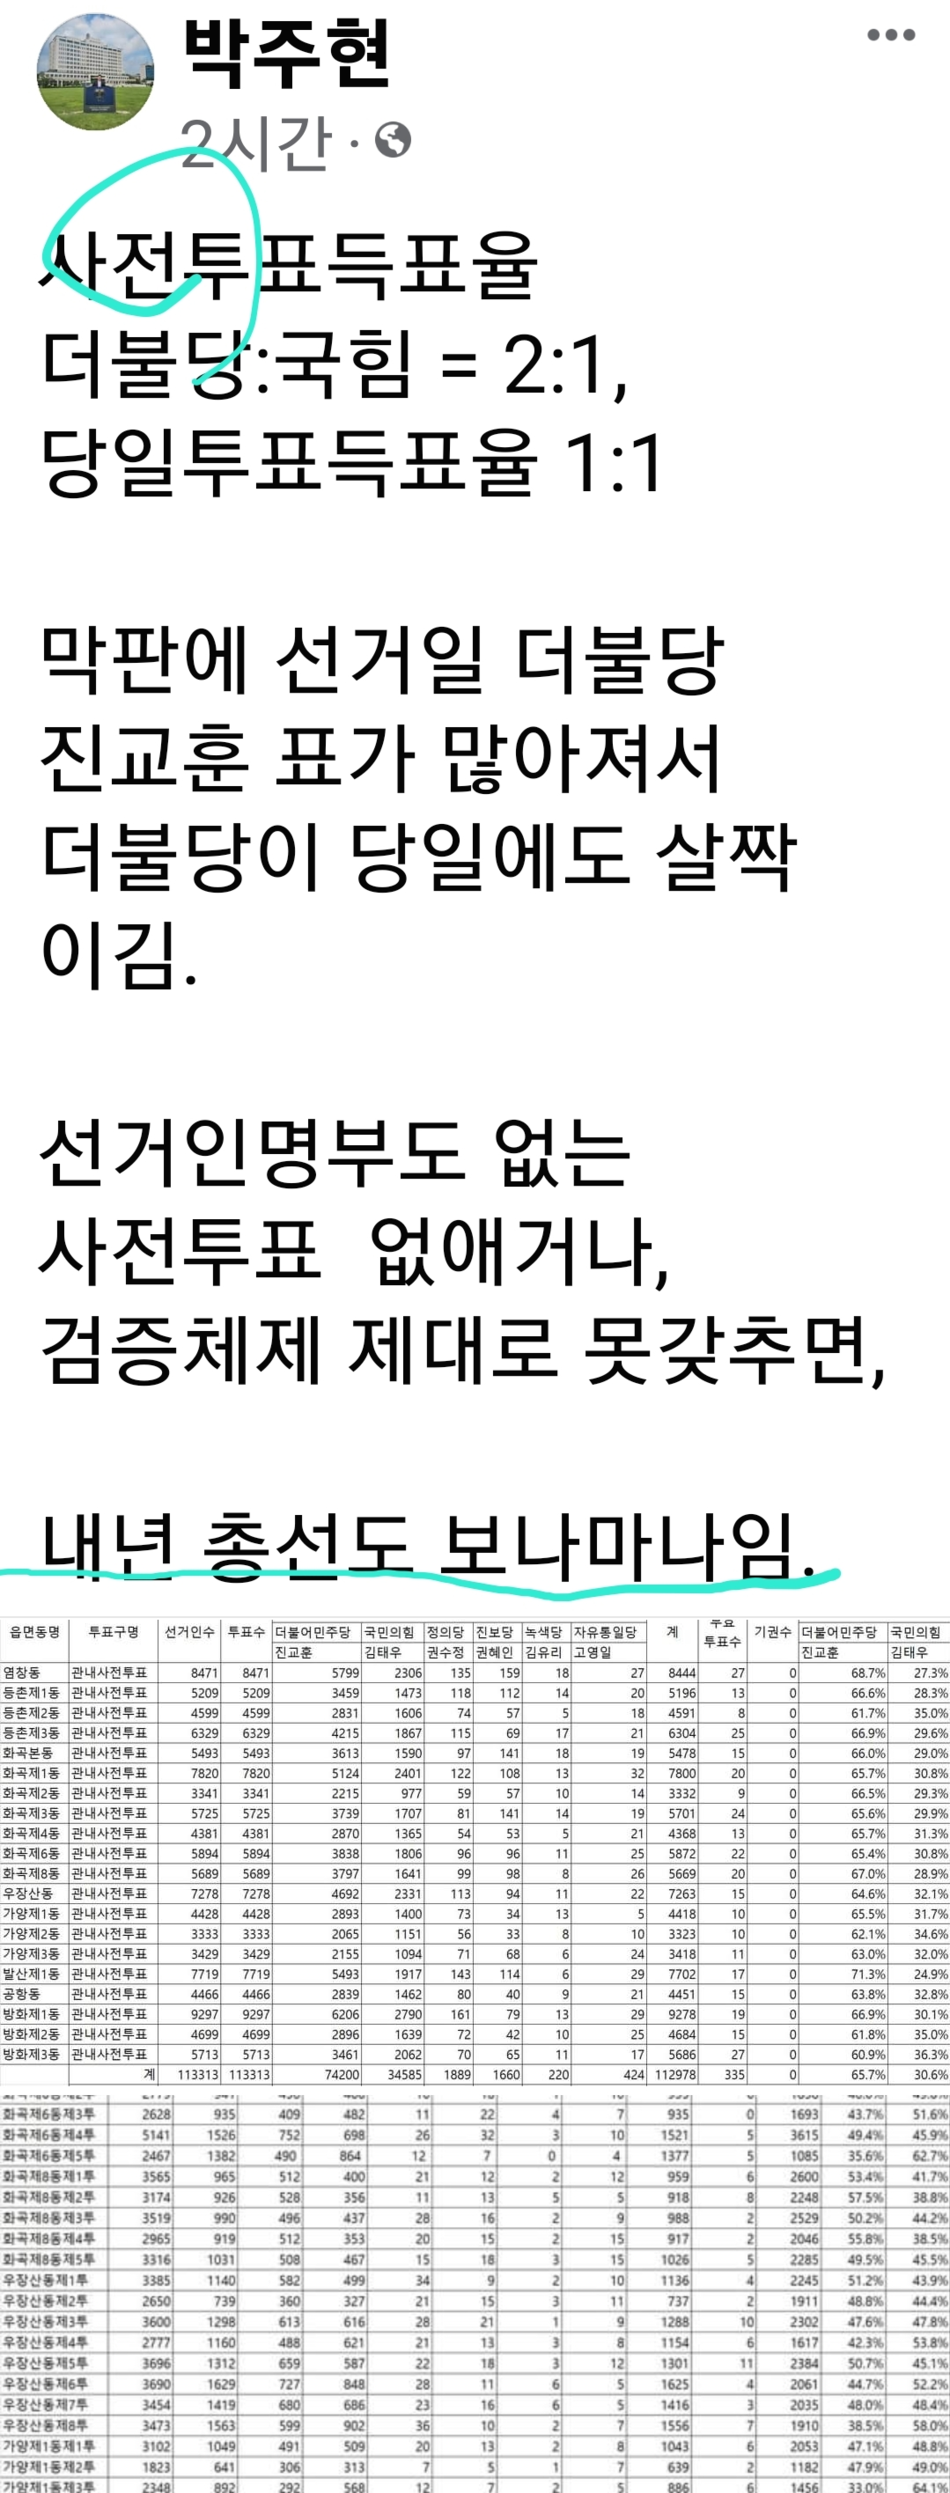 Image04(박주현변호사가 말하는 조작냄새 나는 사전투표 득표율).png